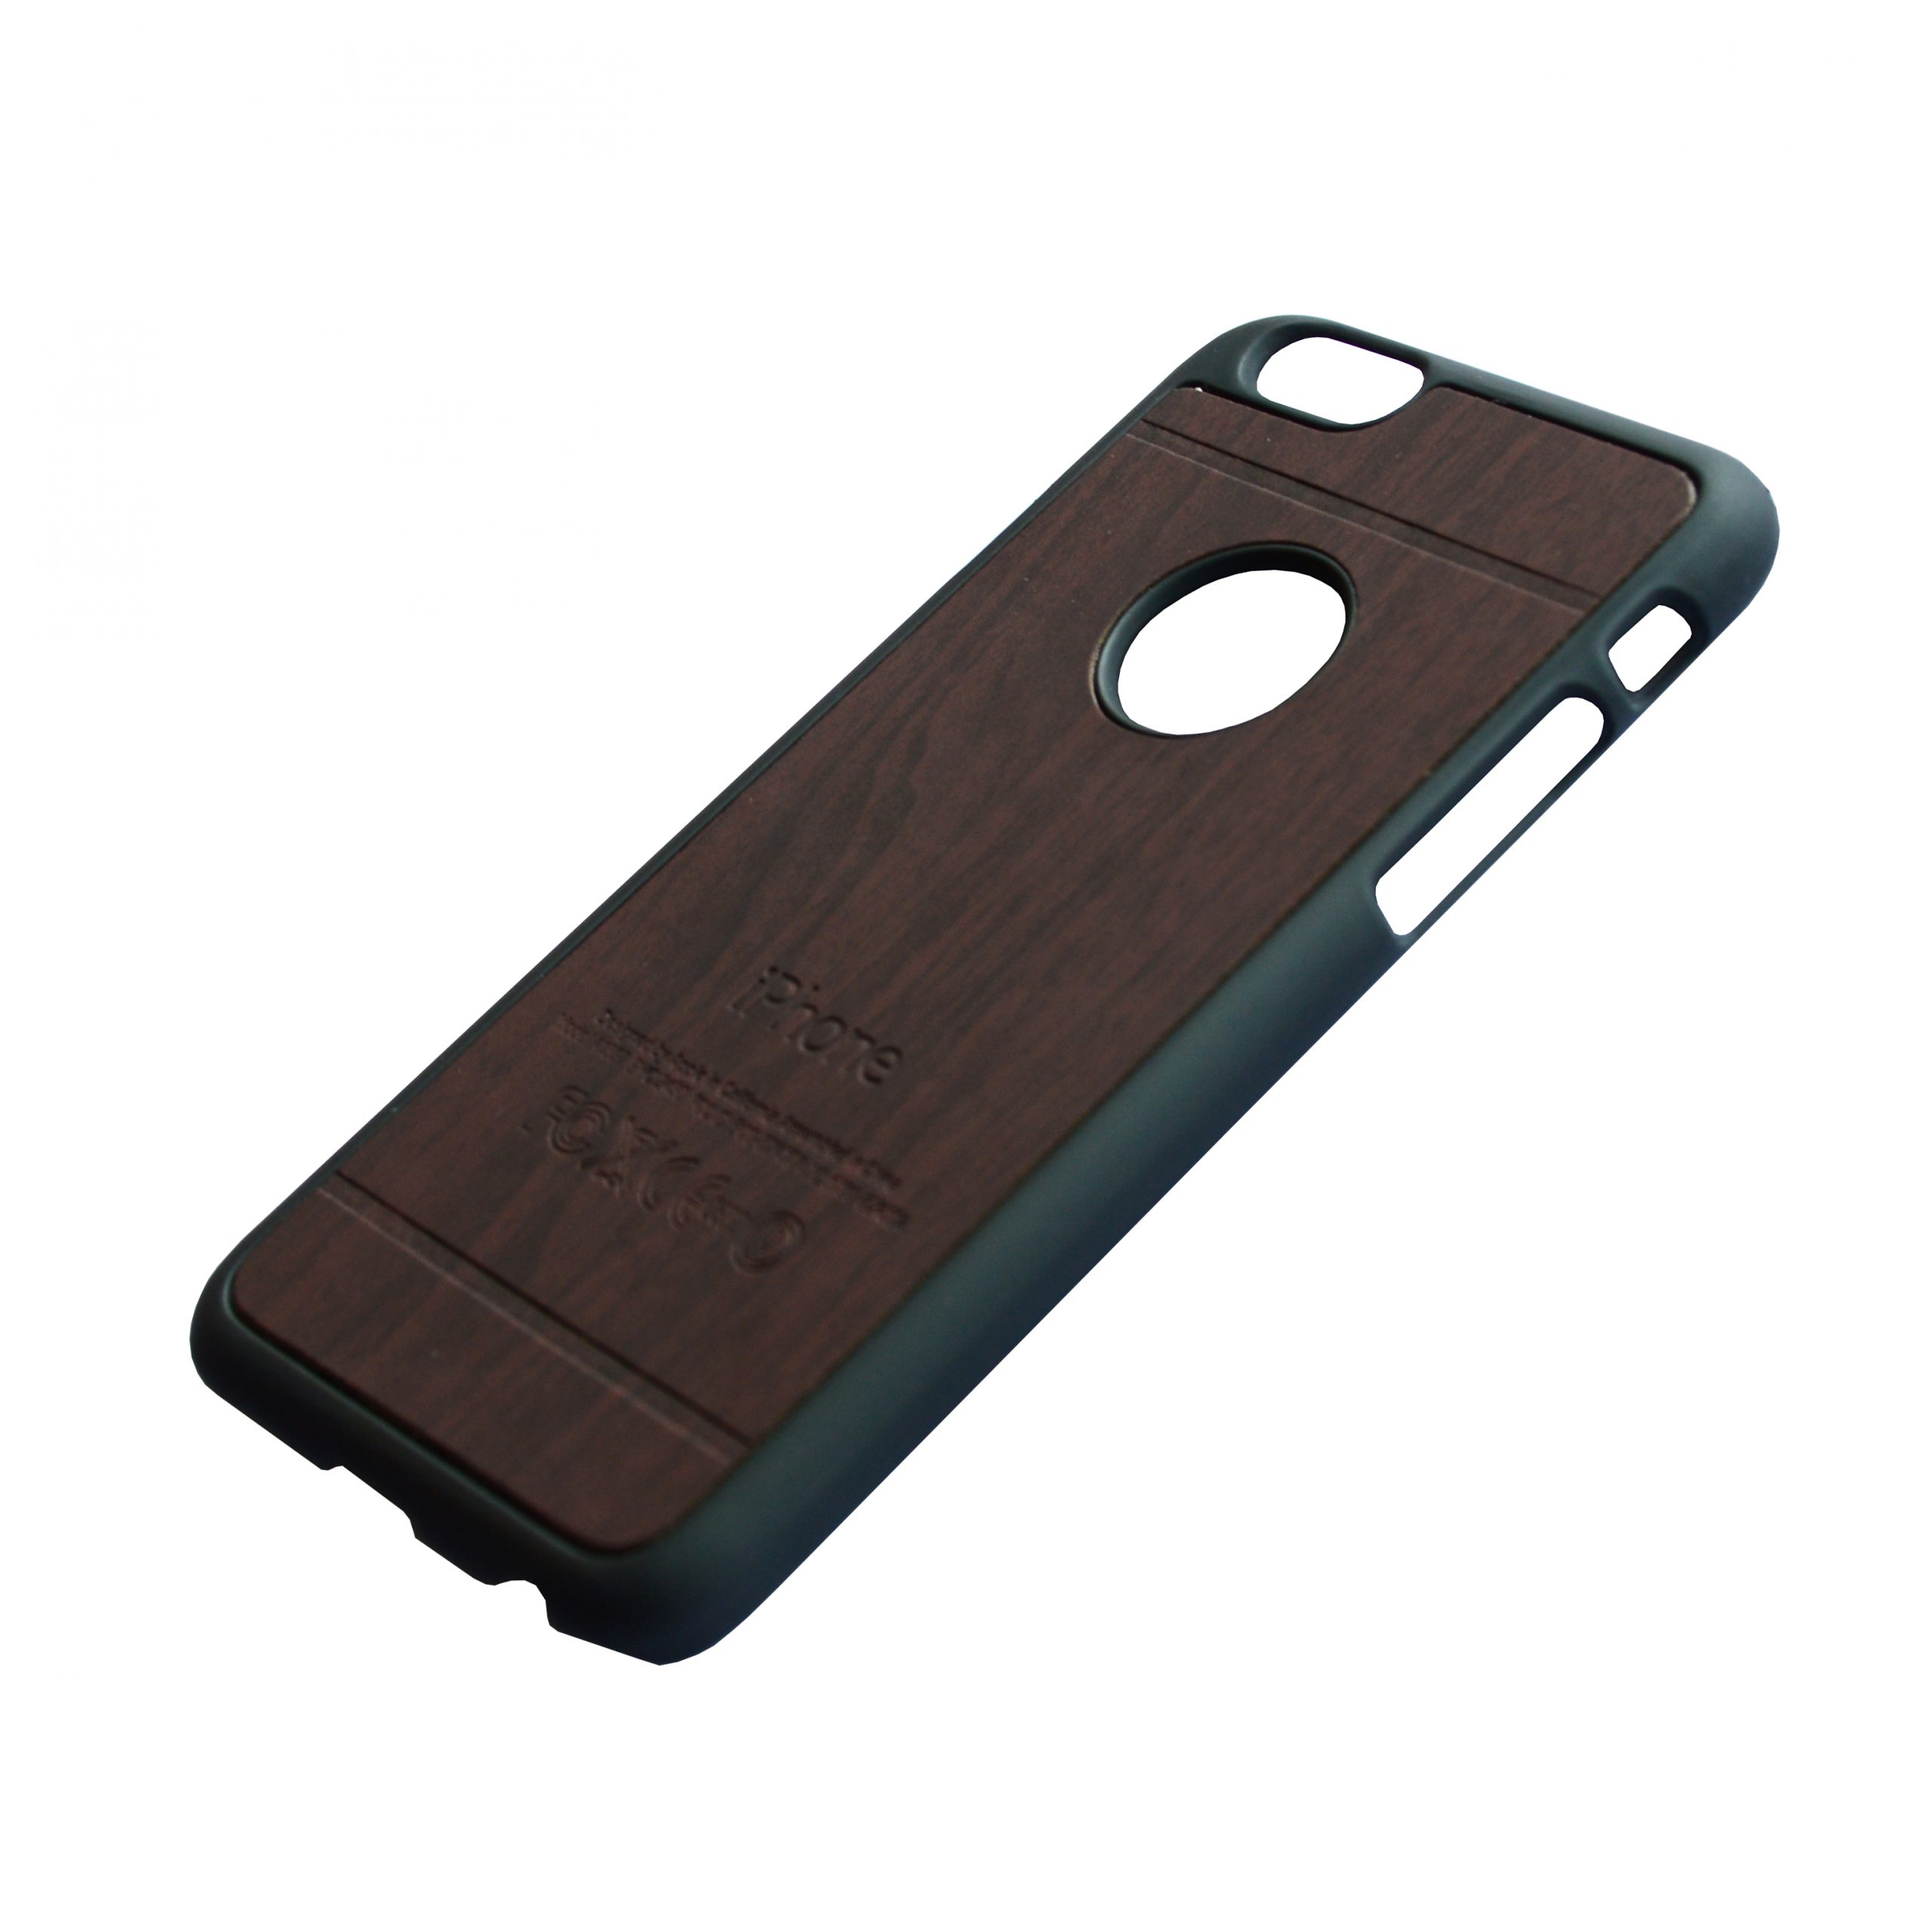 Troosteloos Denk vooruit Groenland Apple iPhone 6 Luxe hout design hoes Donkerbruin - JustXL